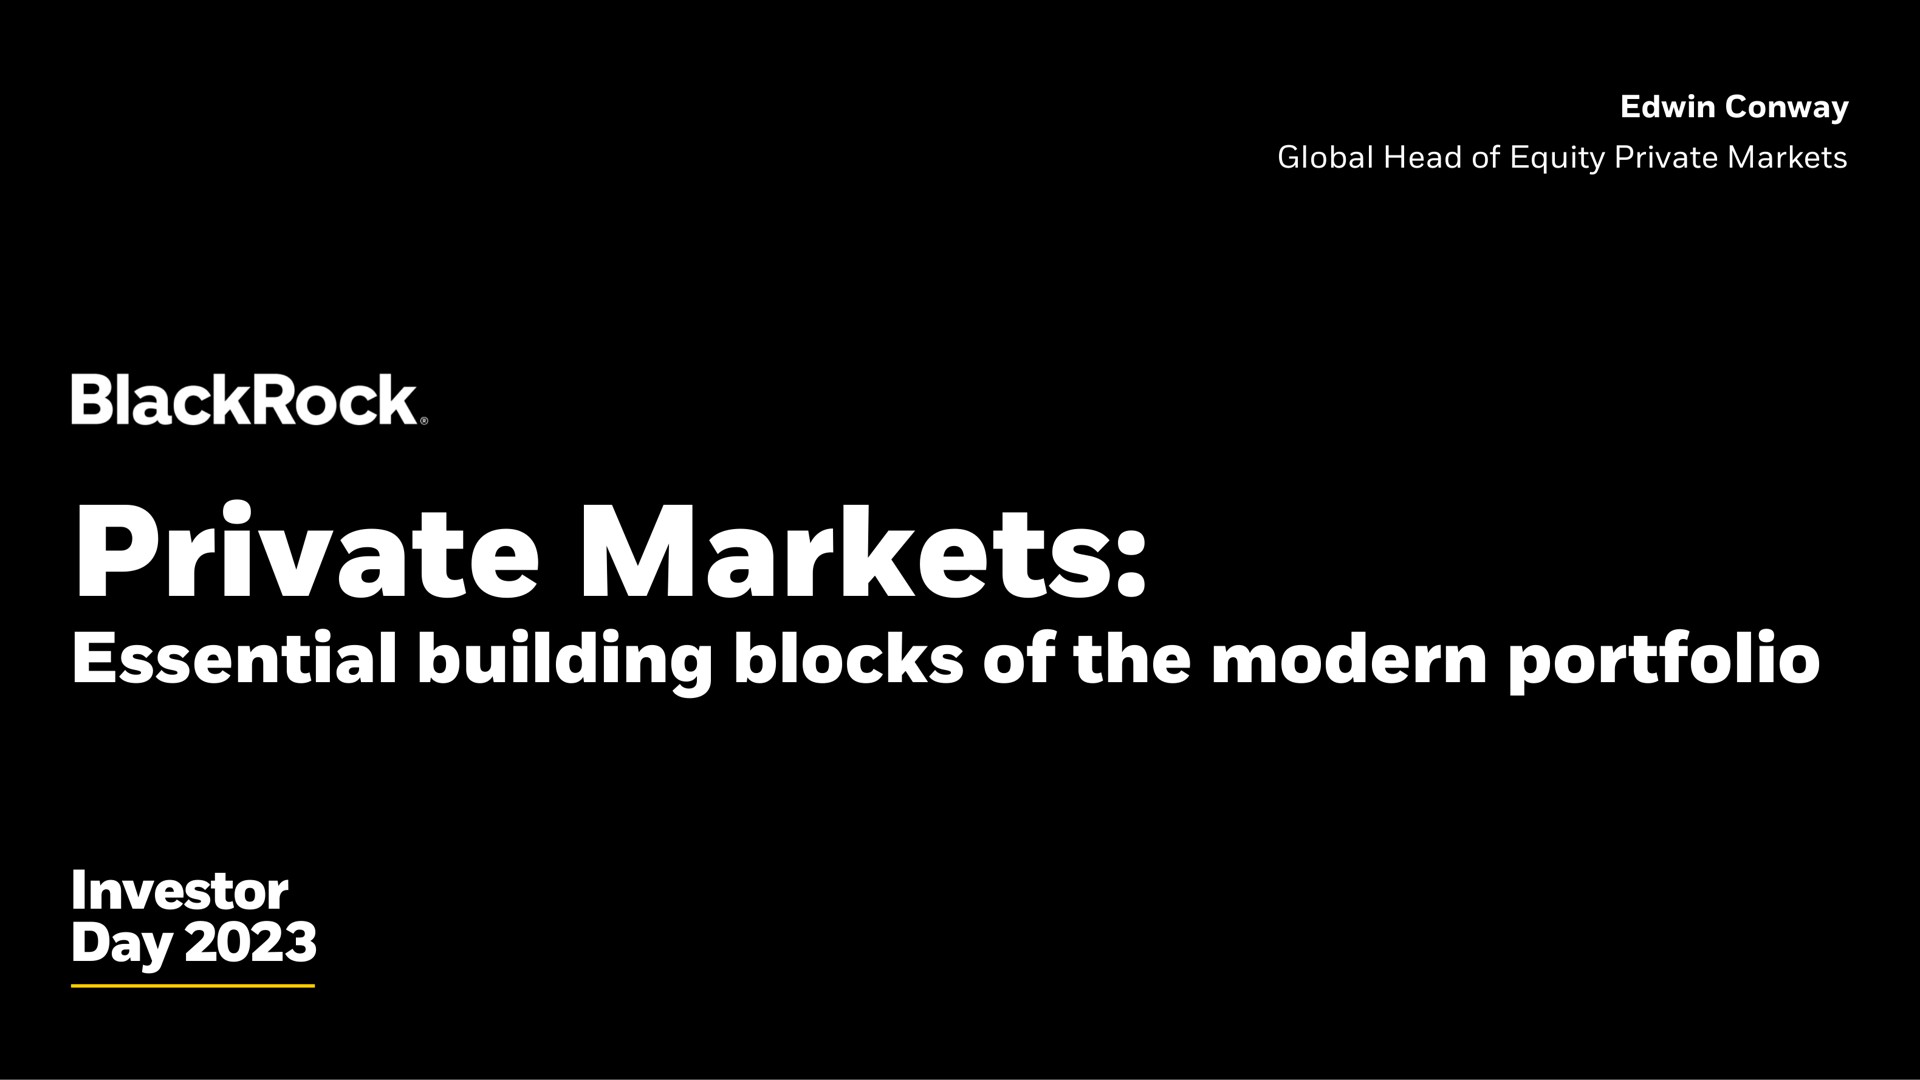 private markets essential building blocks of the modern portfolio investor day | BlackRock